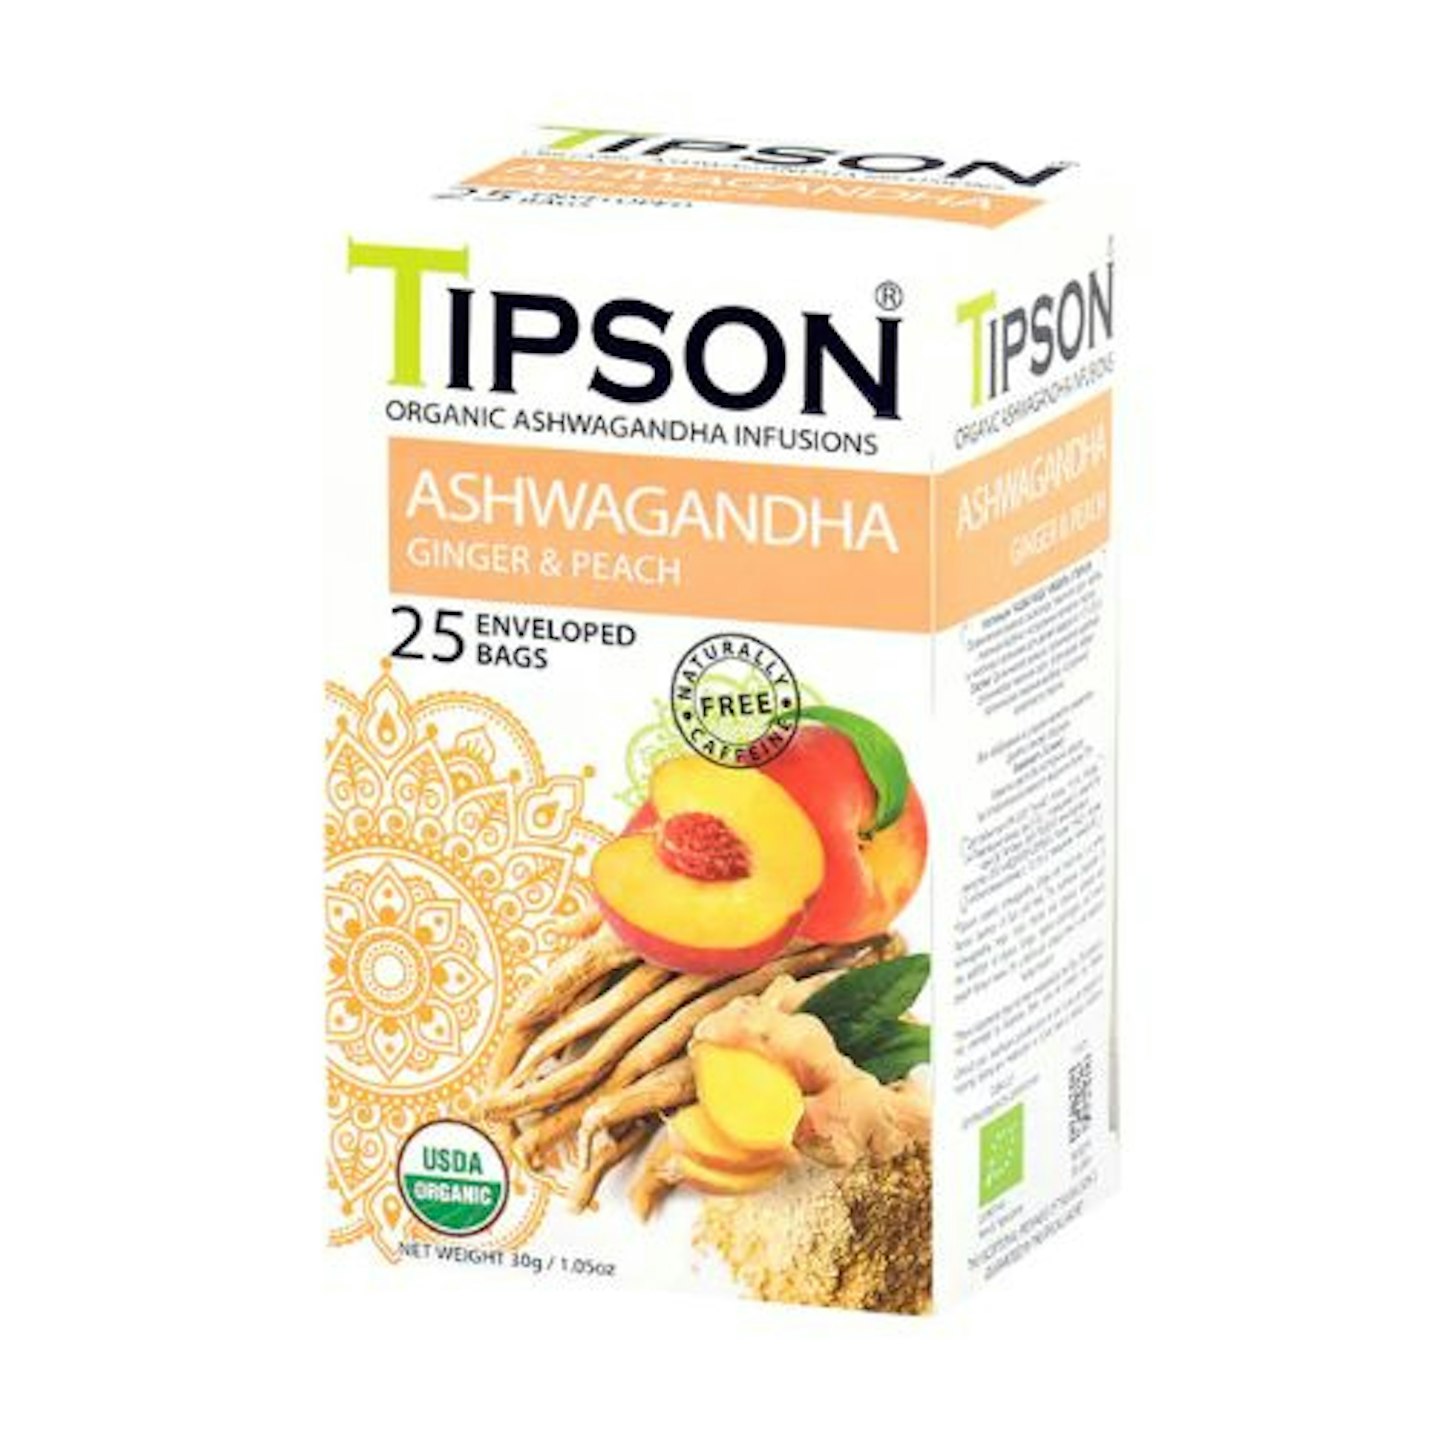 Tipson Organic Ashwagandha Ginger and Peach, 25 Bags